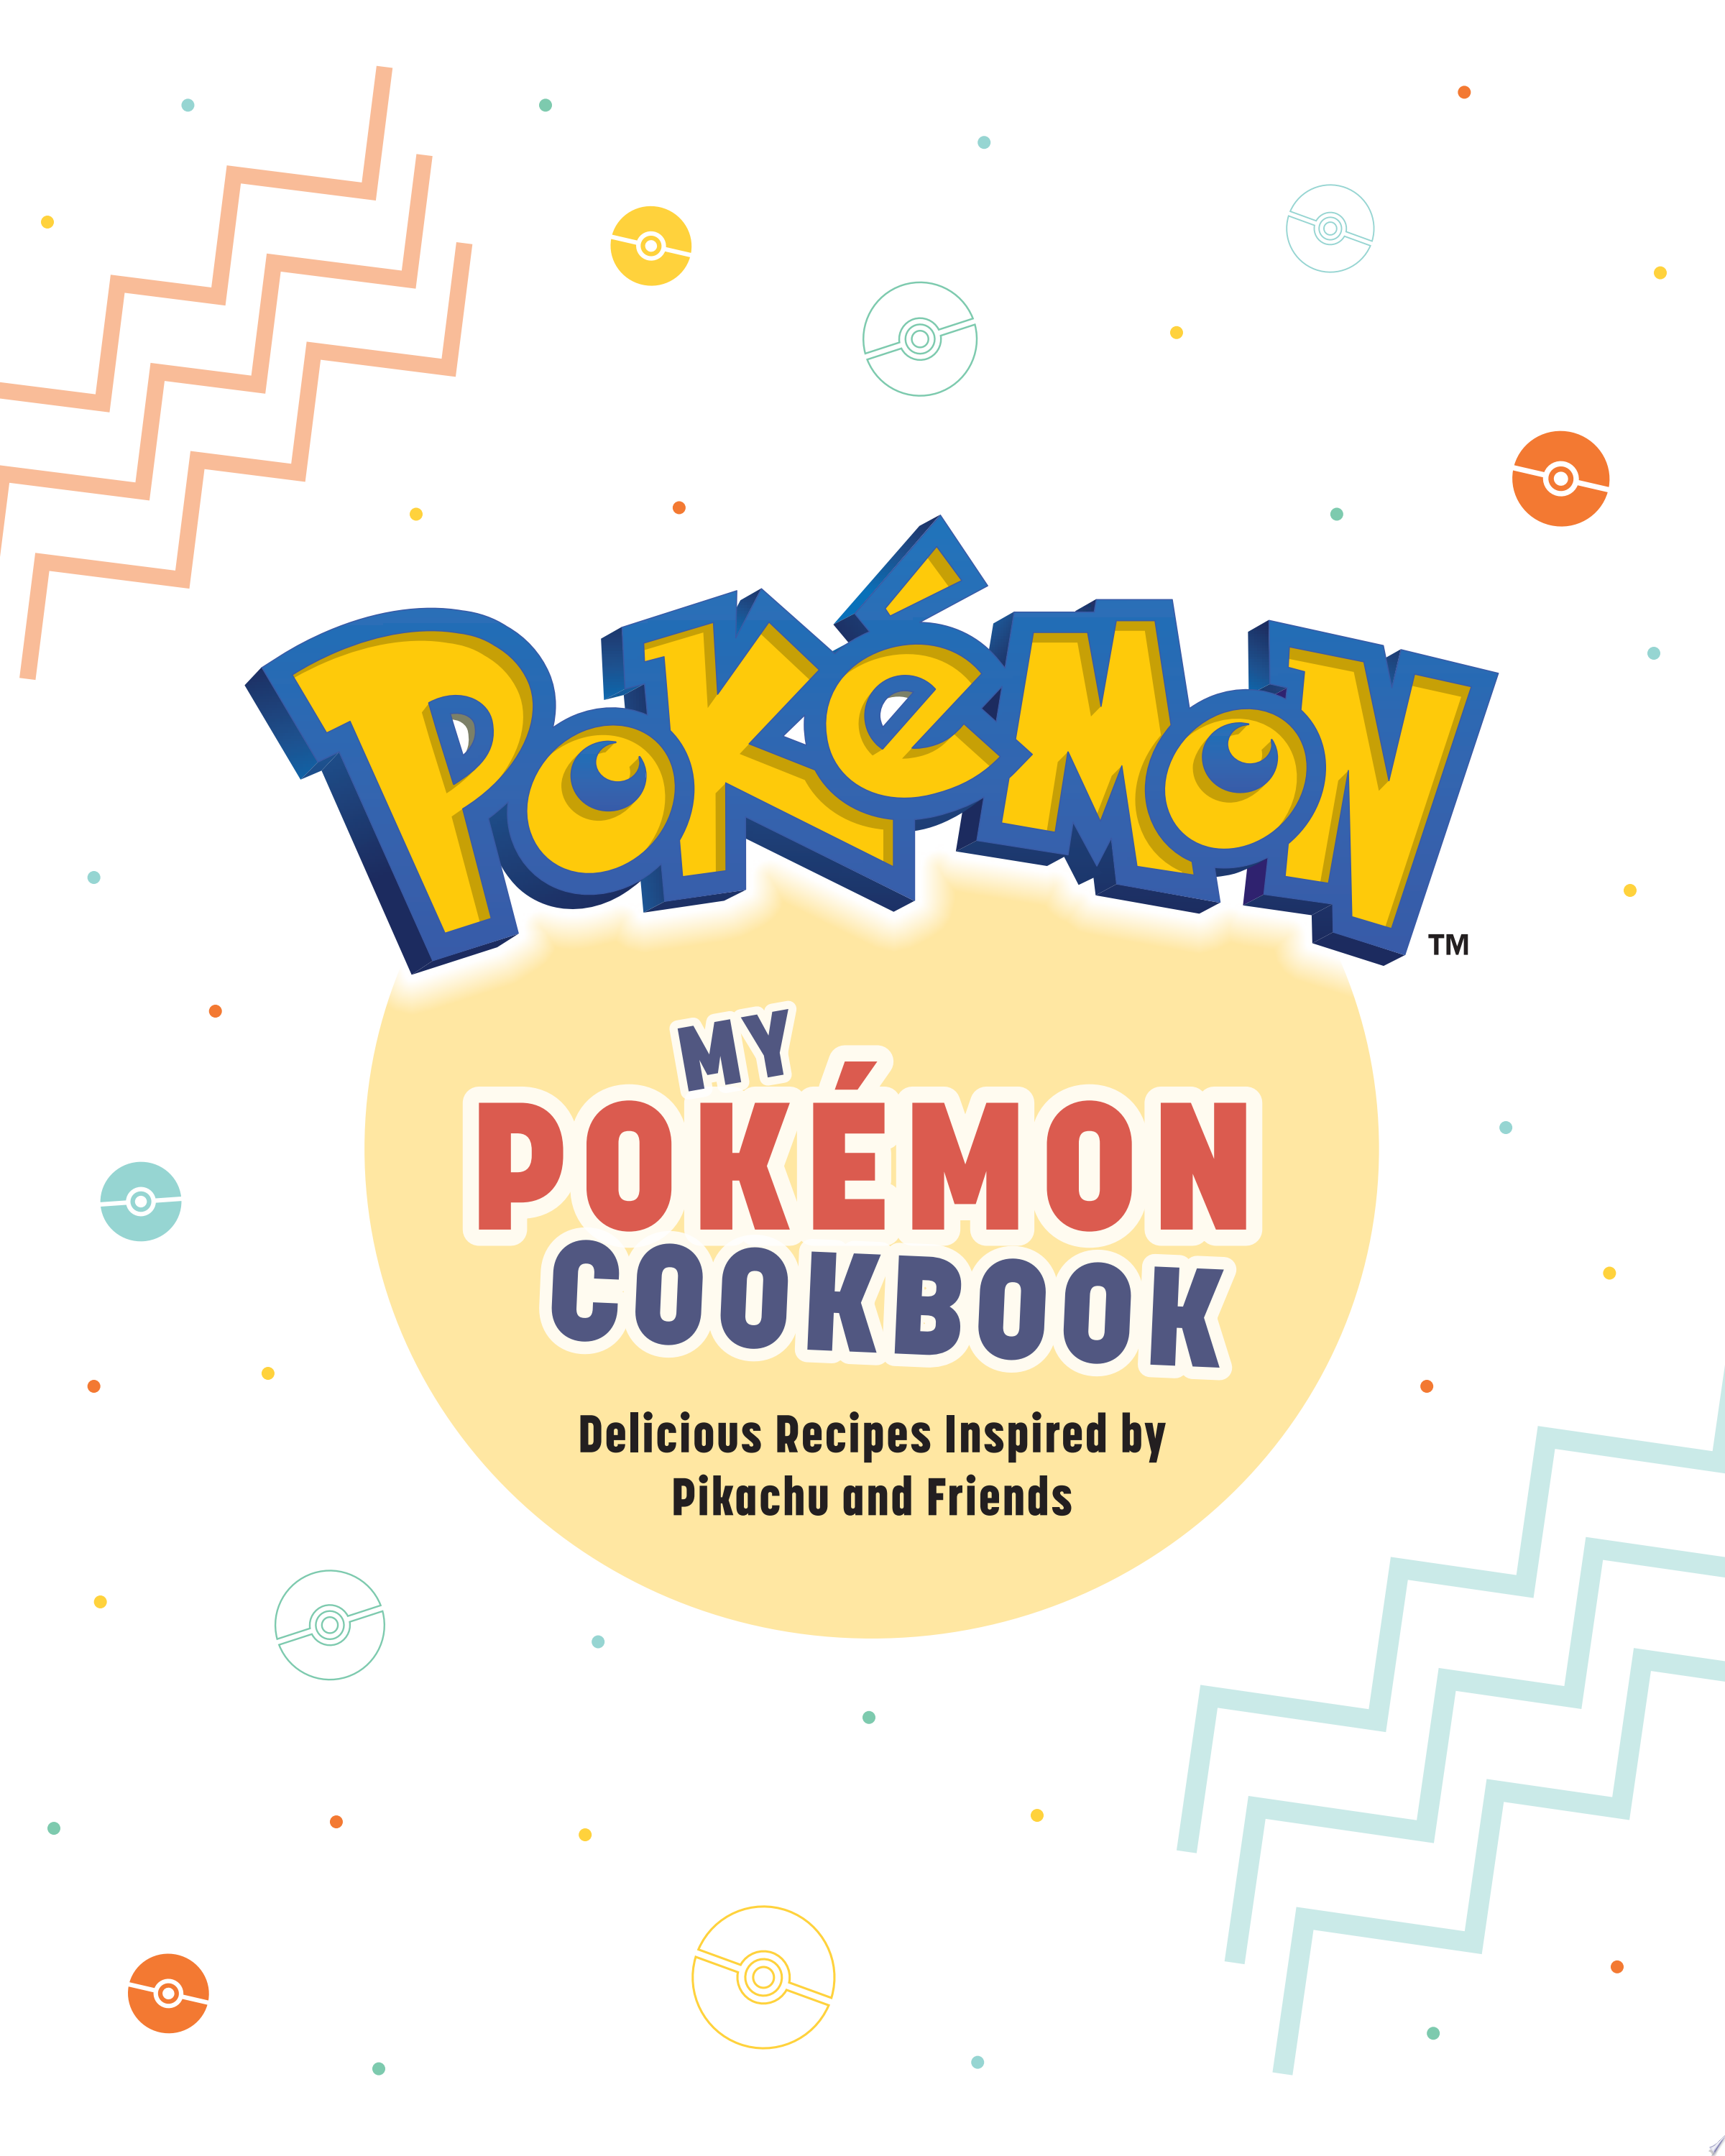 Image for "My Pokémon Cookbook"